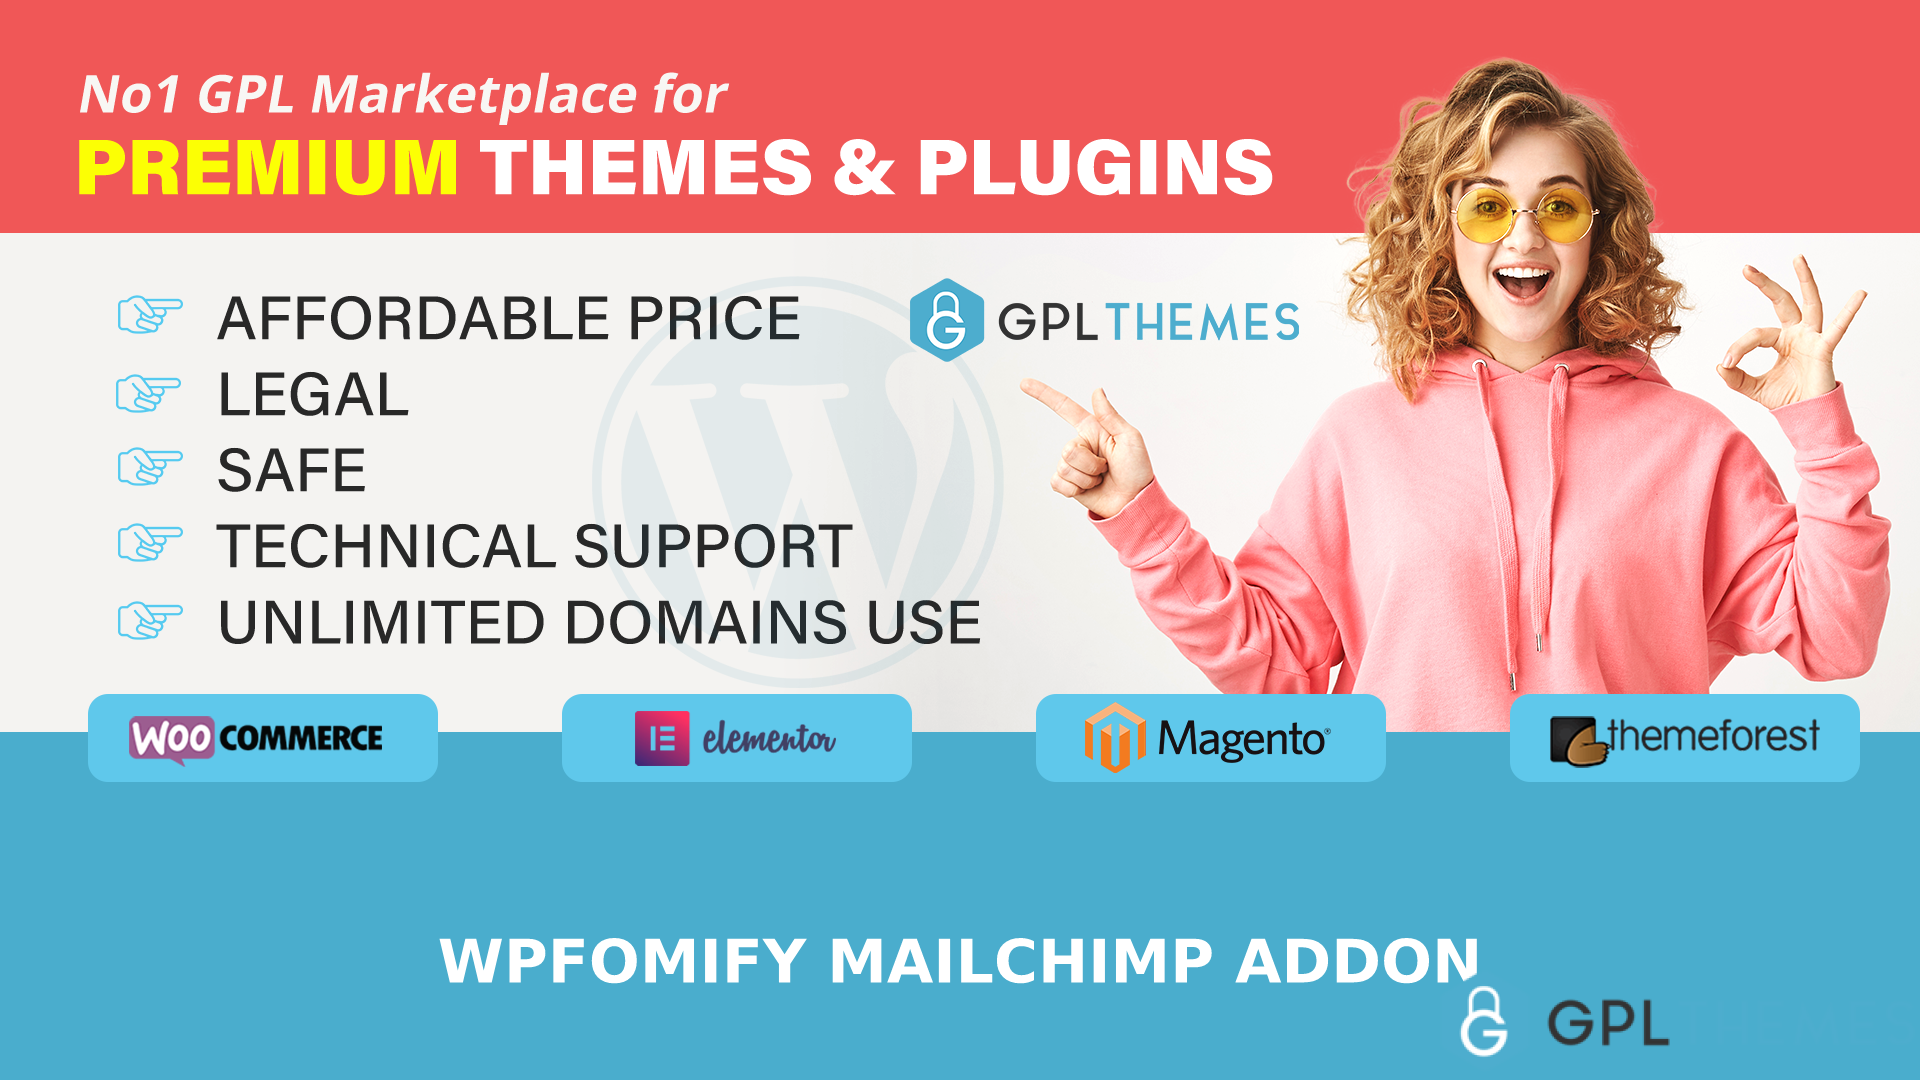 WPfomify MailChimp Addon